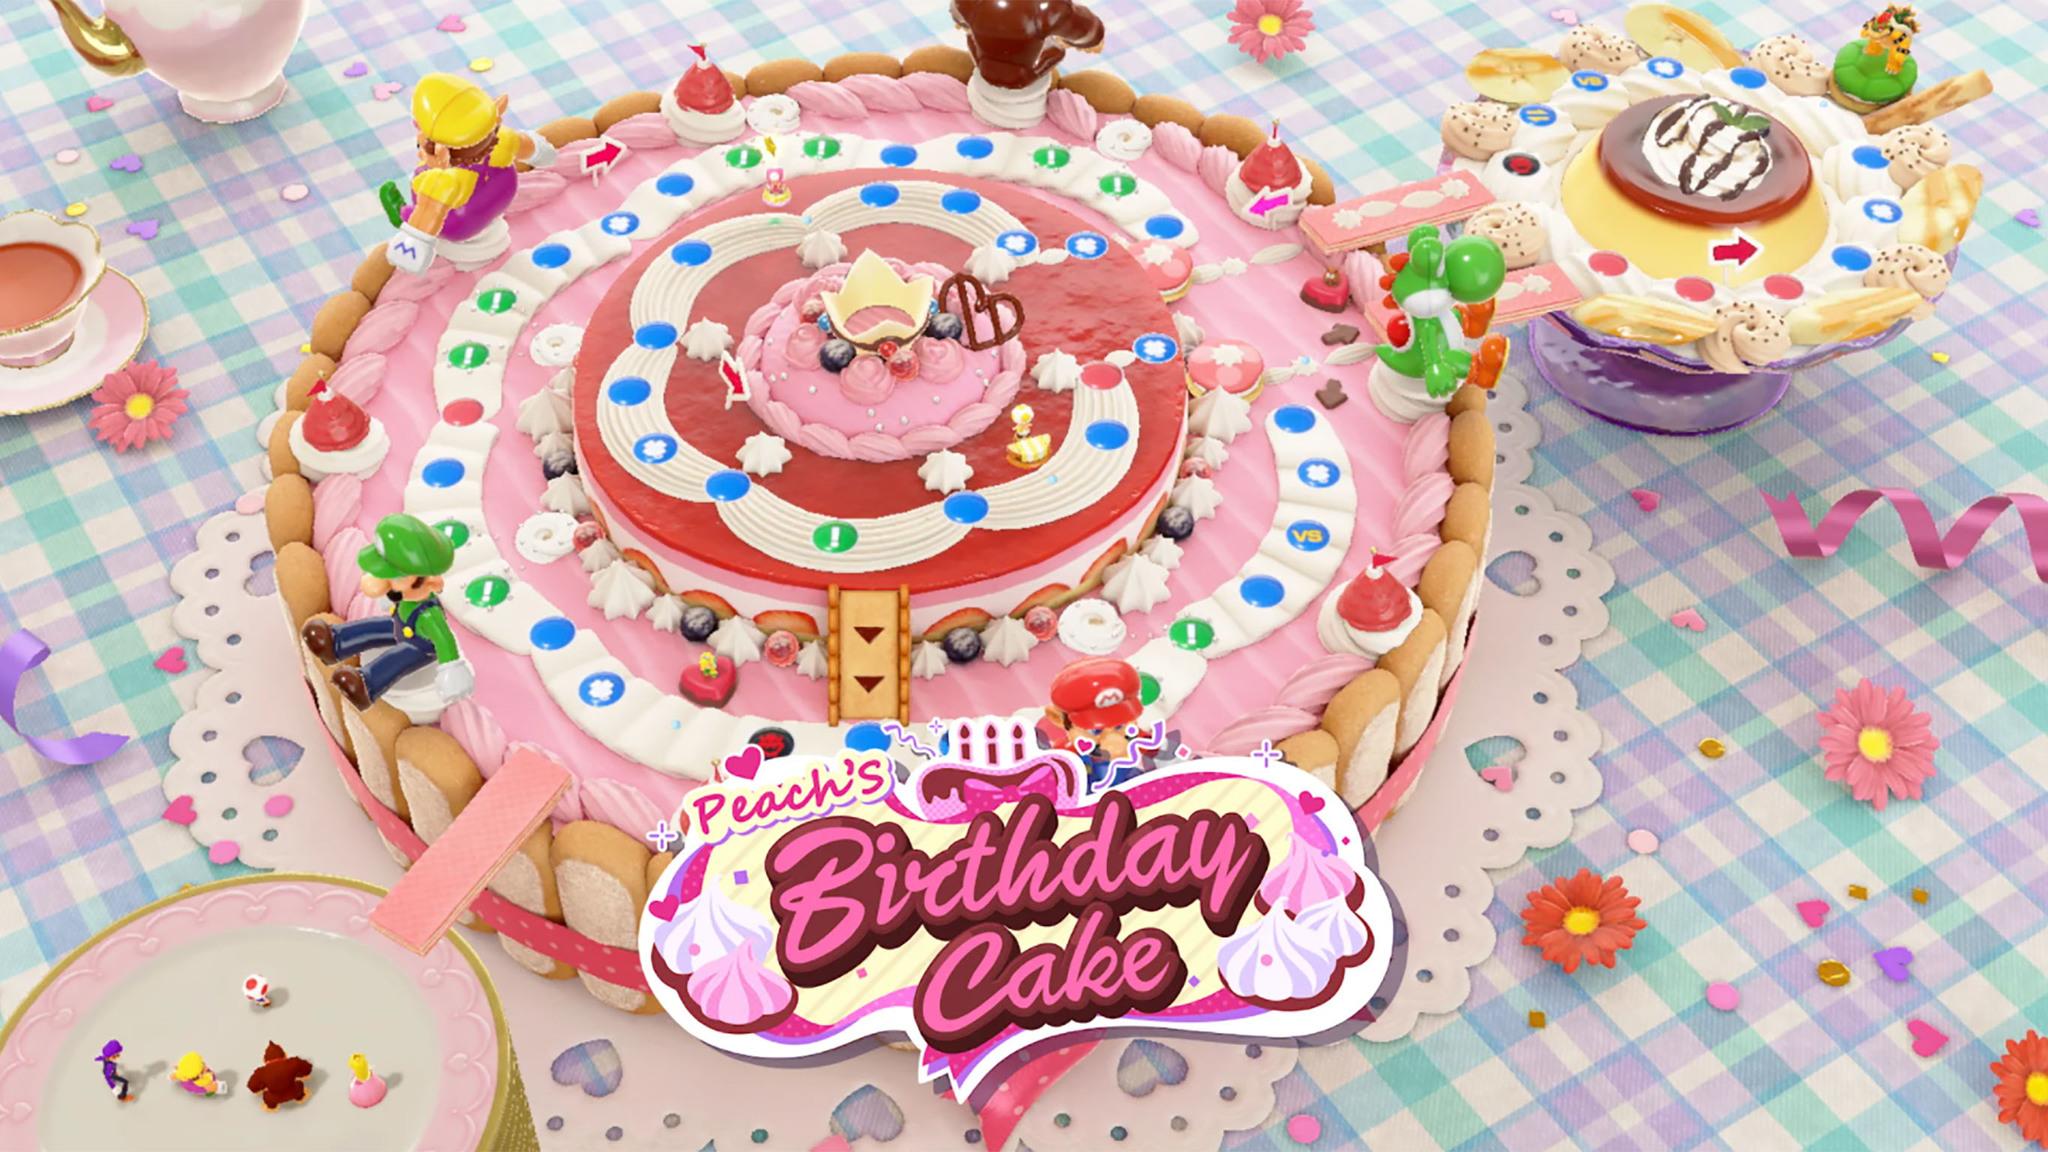 Mario Party Superstars Peach Birthday Cake